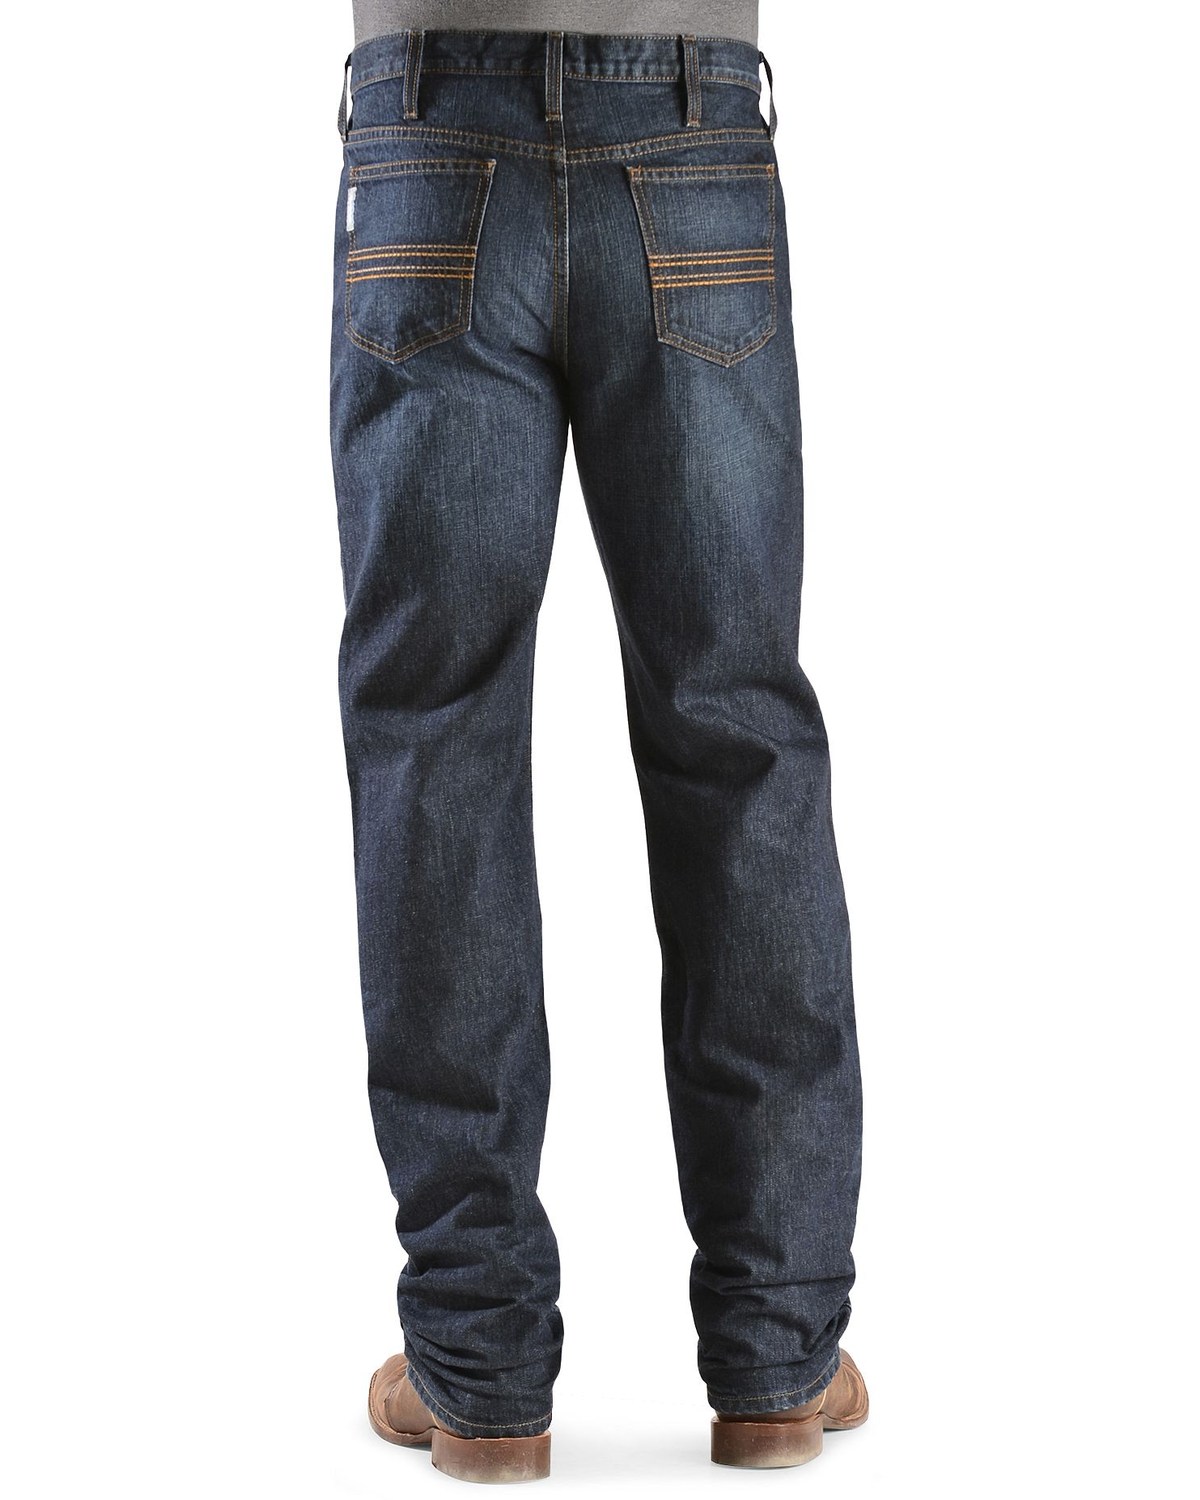 Cinch Men's Silver Label Slim Fit Jeans